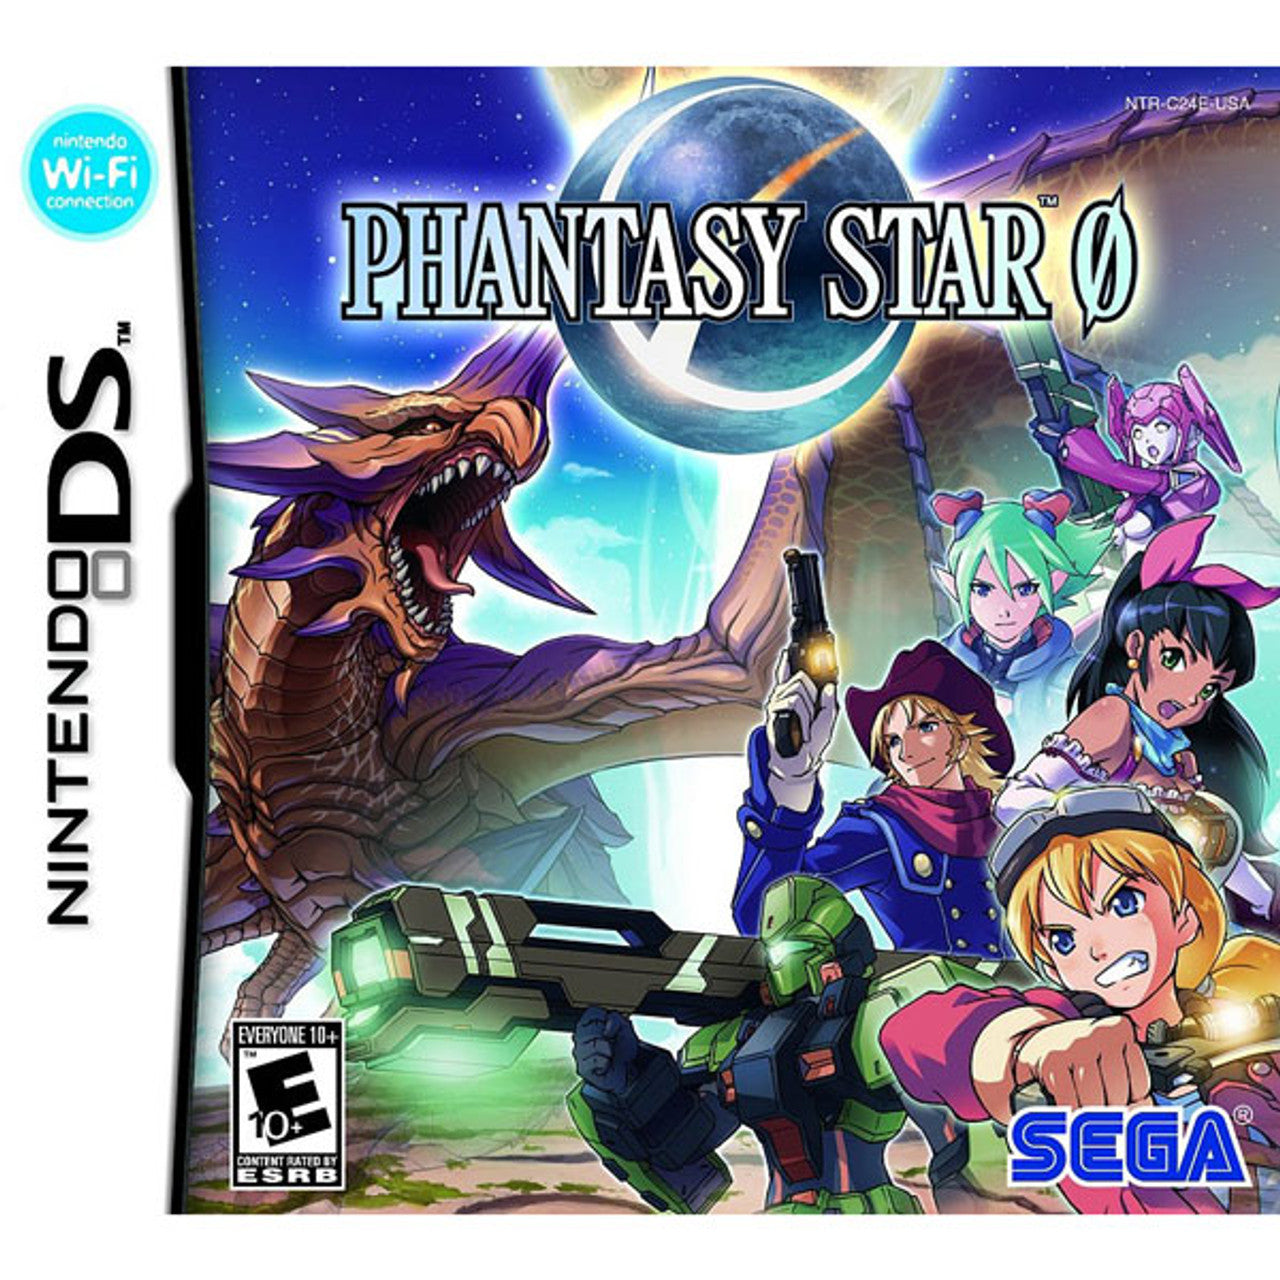 Phantasy Star 0 - Nintendo DS